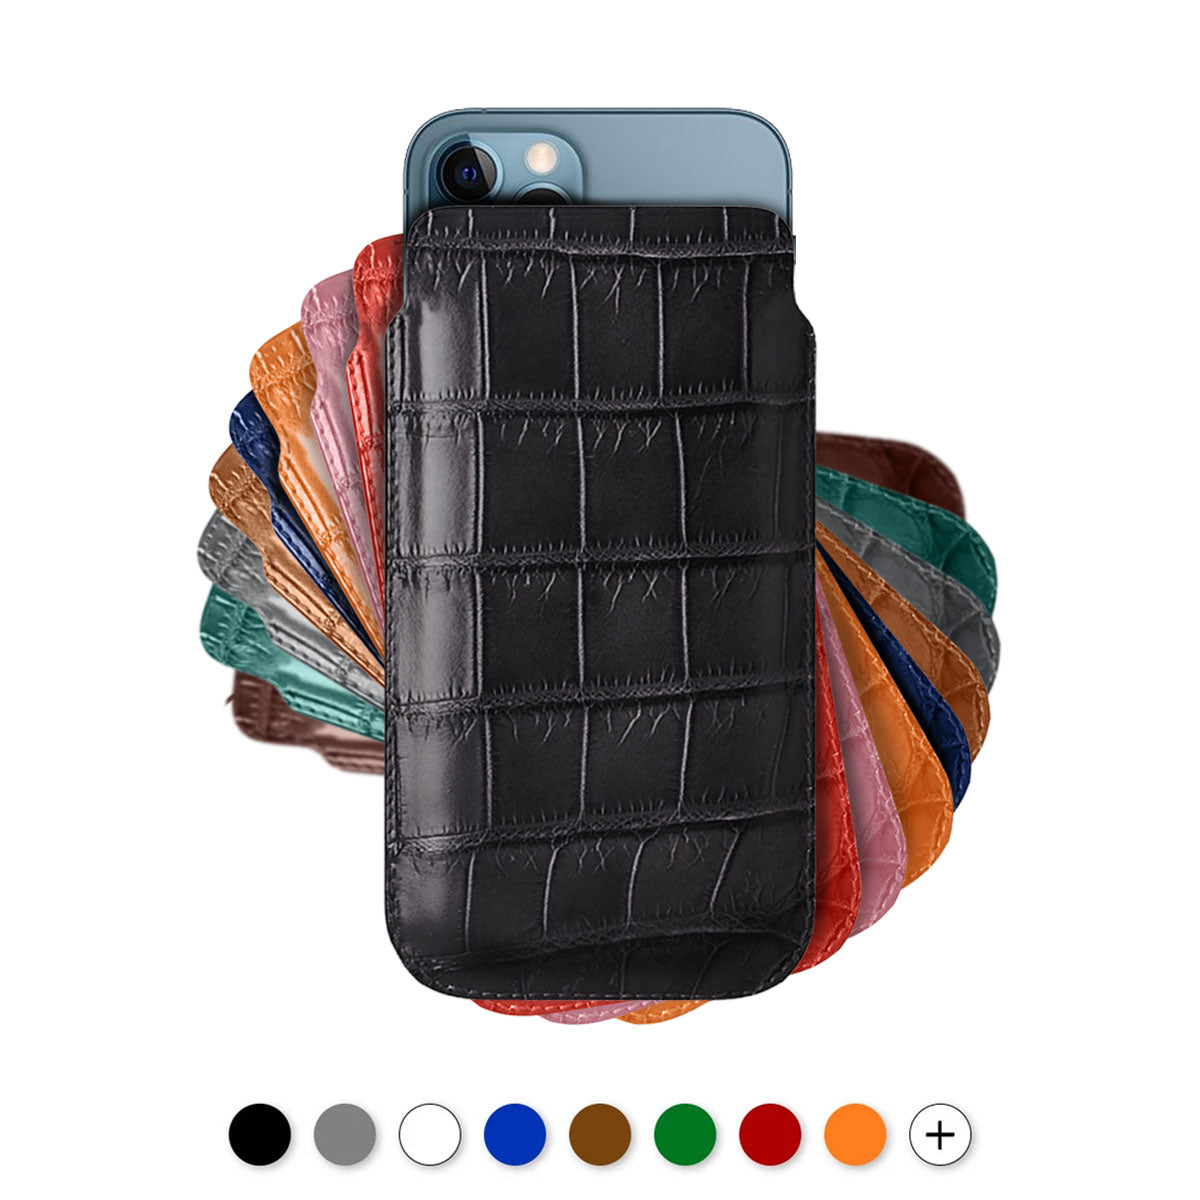 iPhone leather pouch case / slip case - iPhone 12 & 11 ( Pro / Max / Mini ) - Genuine alligator